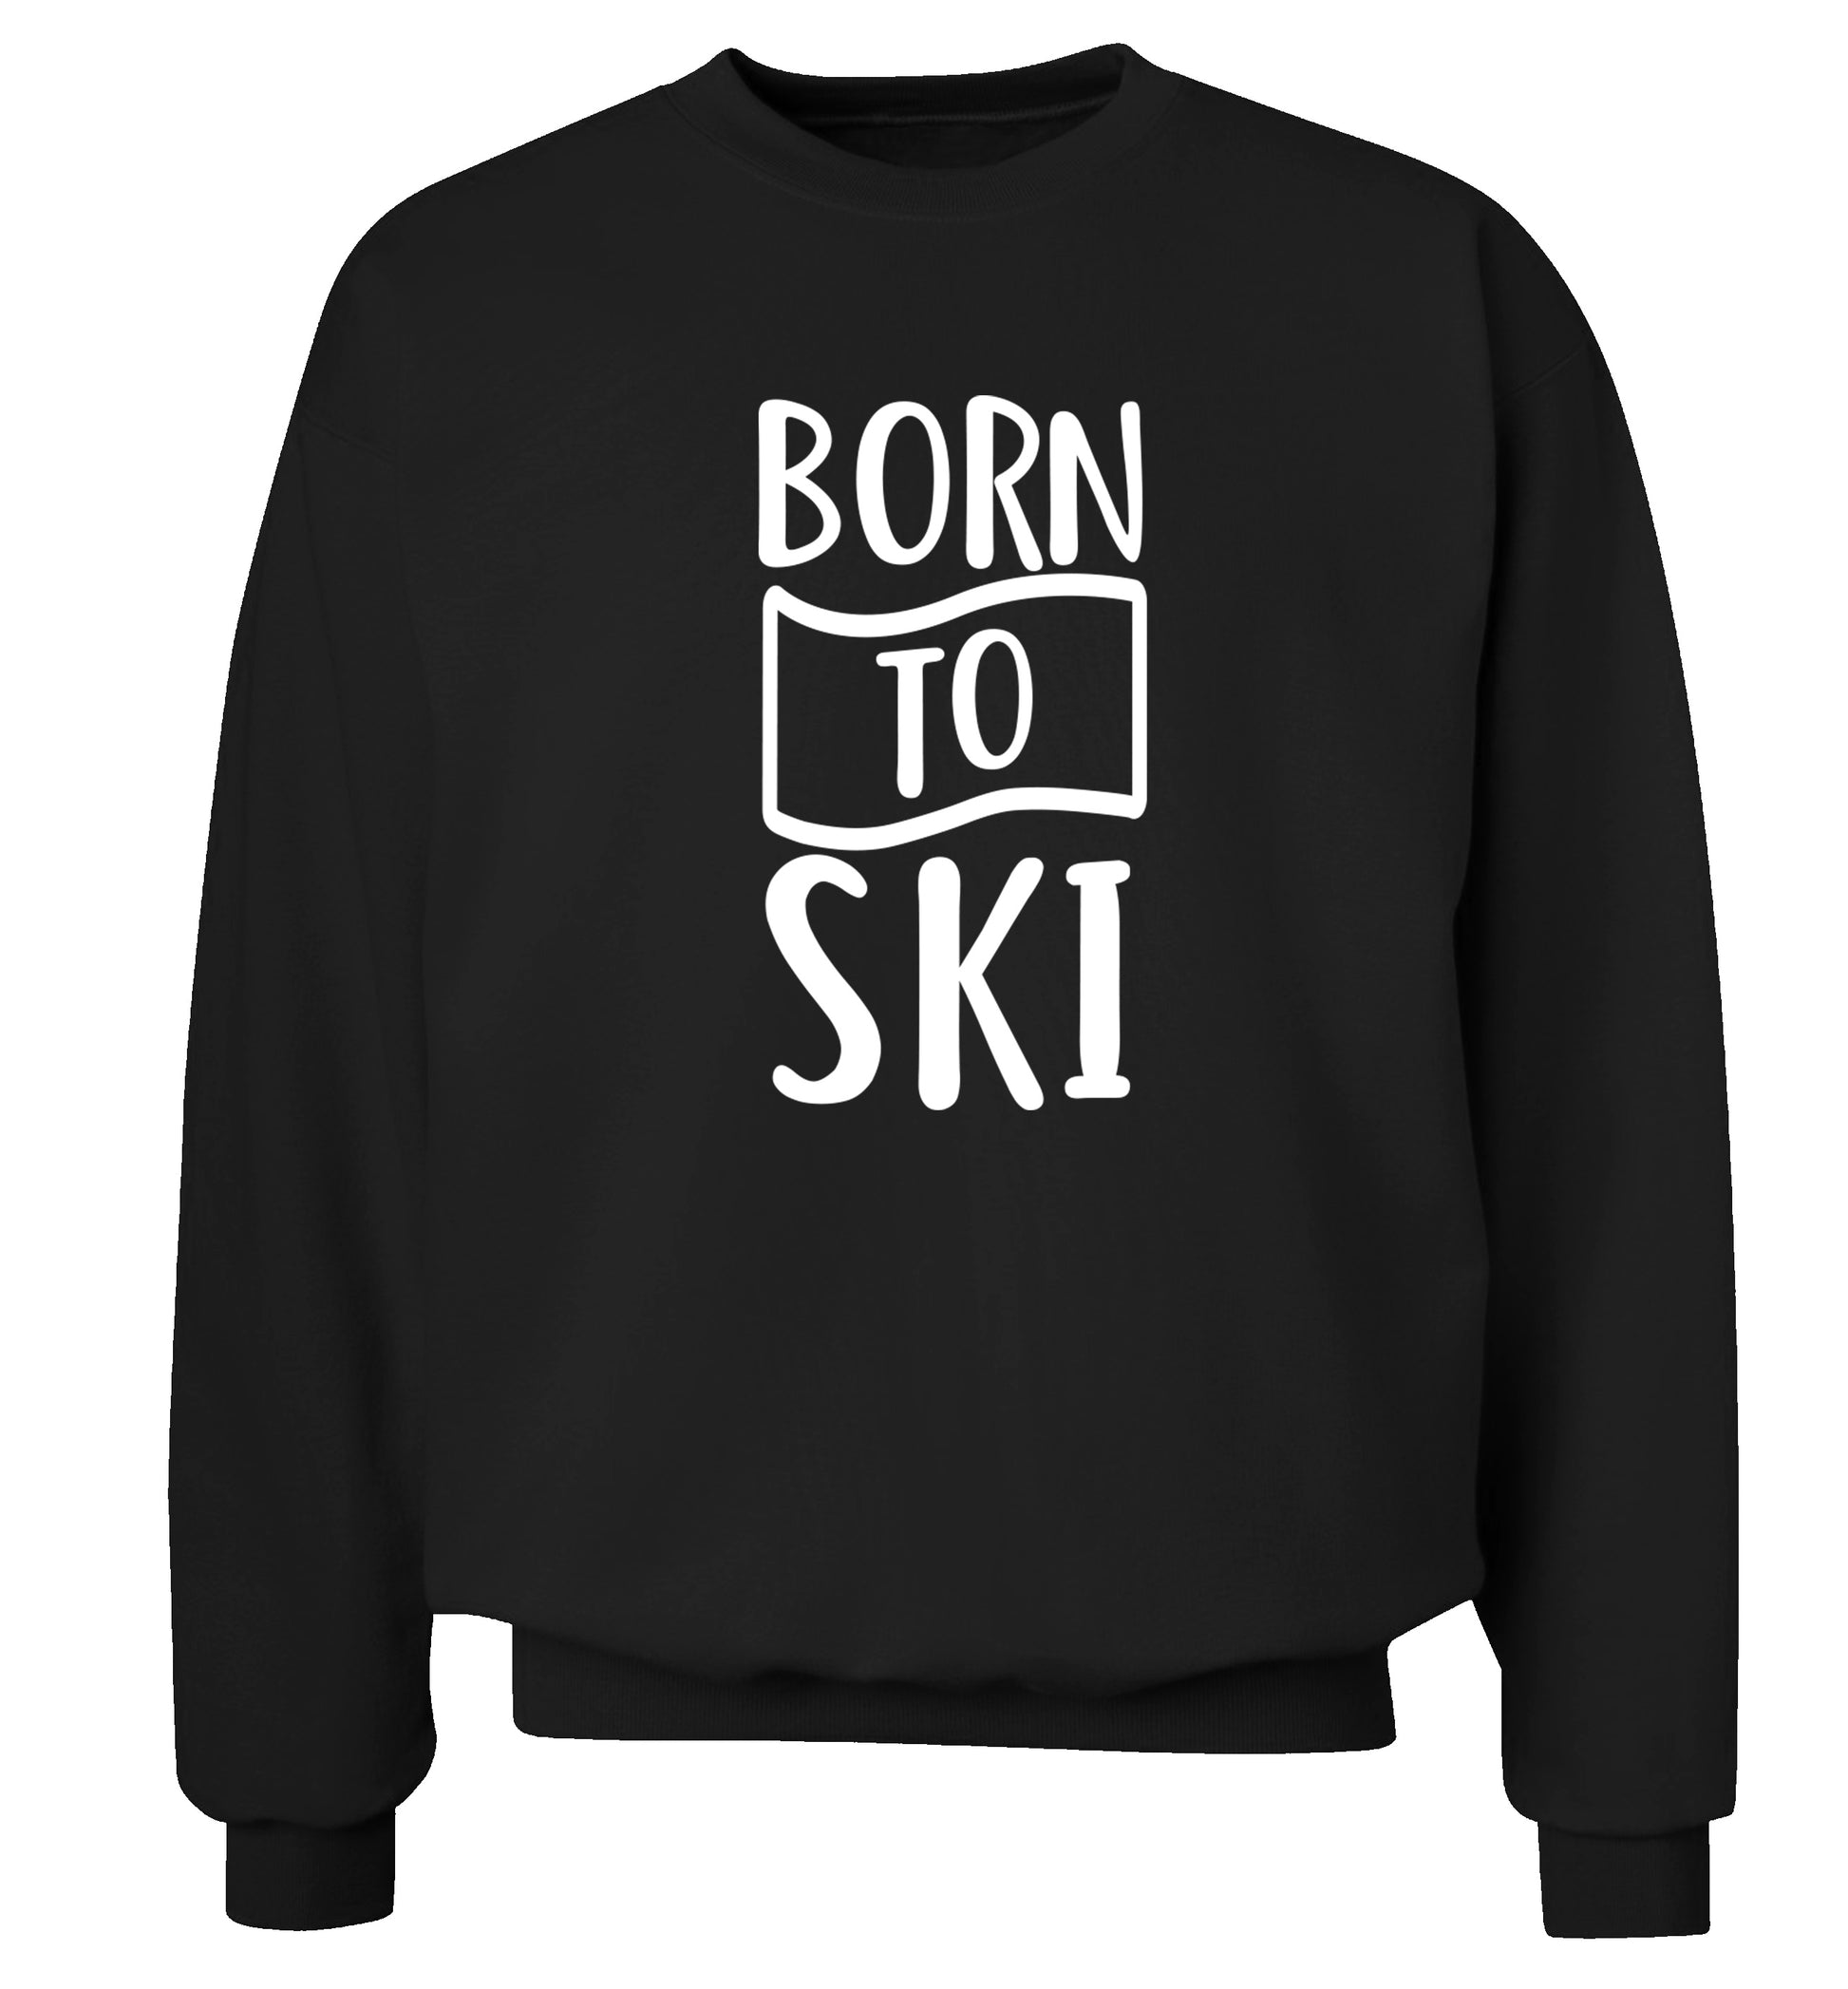 Born to ski Adult's unisexblack Sweater 2XL